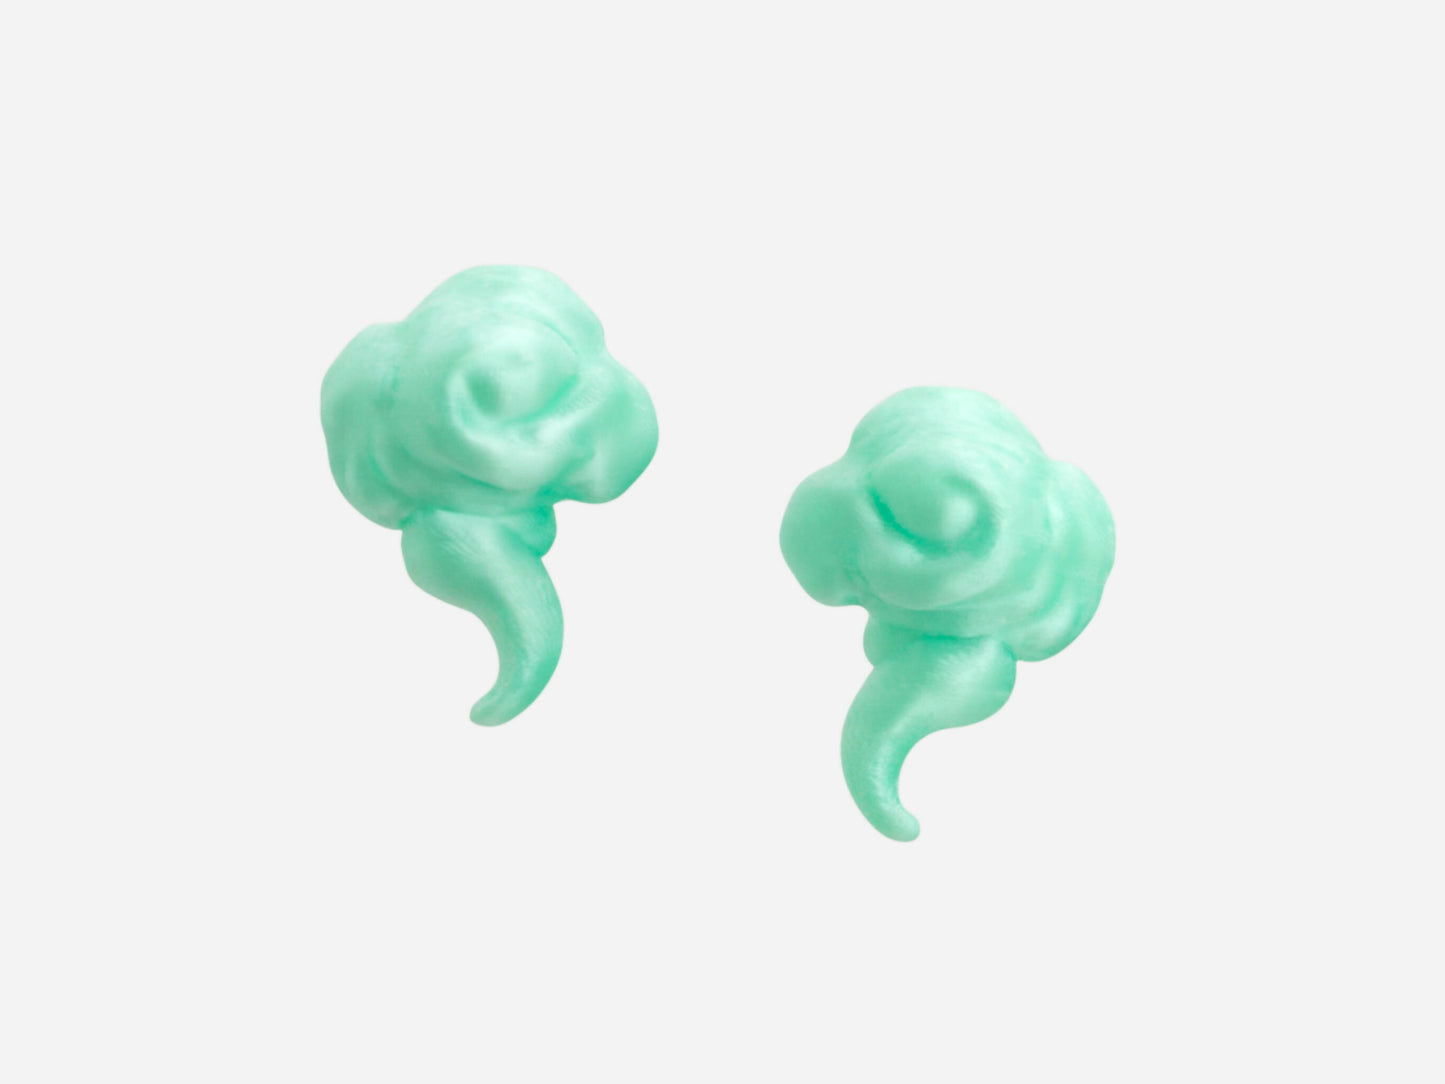 3D Printed Auspicious Clouds Earrings in Celadon Green